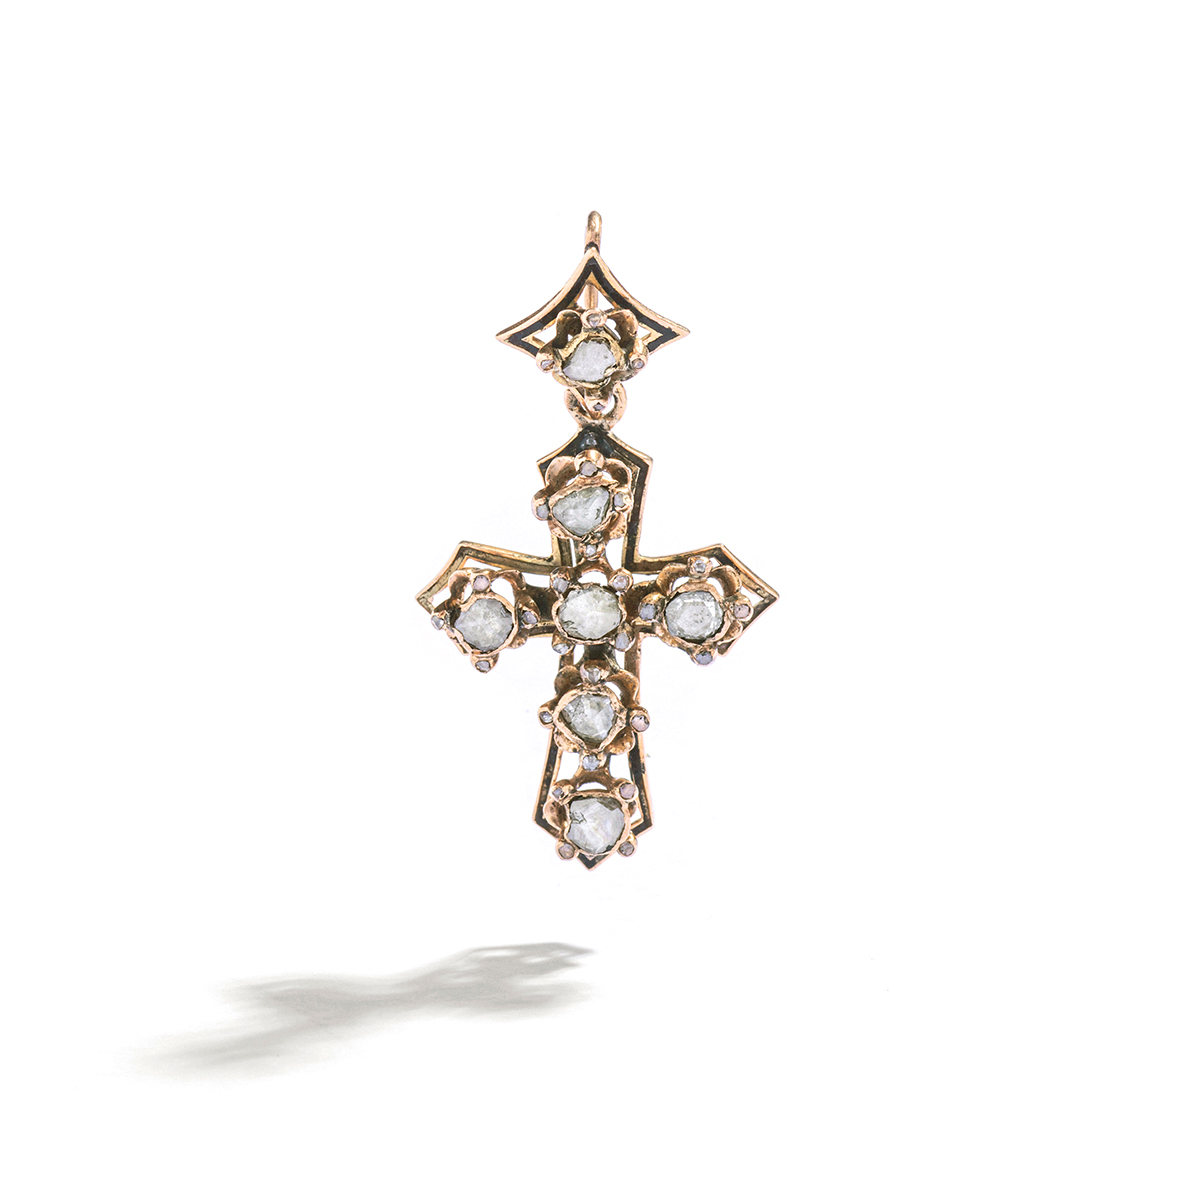 Antique pendant cross diamond Lacquer earring